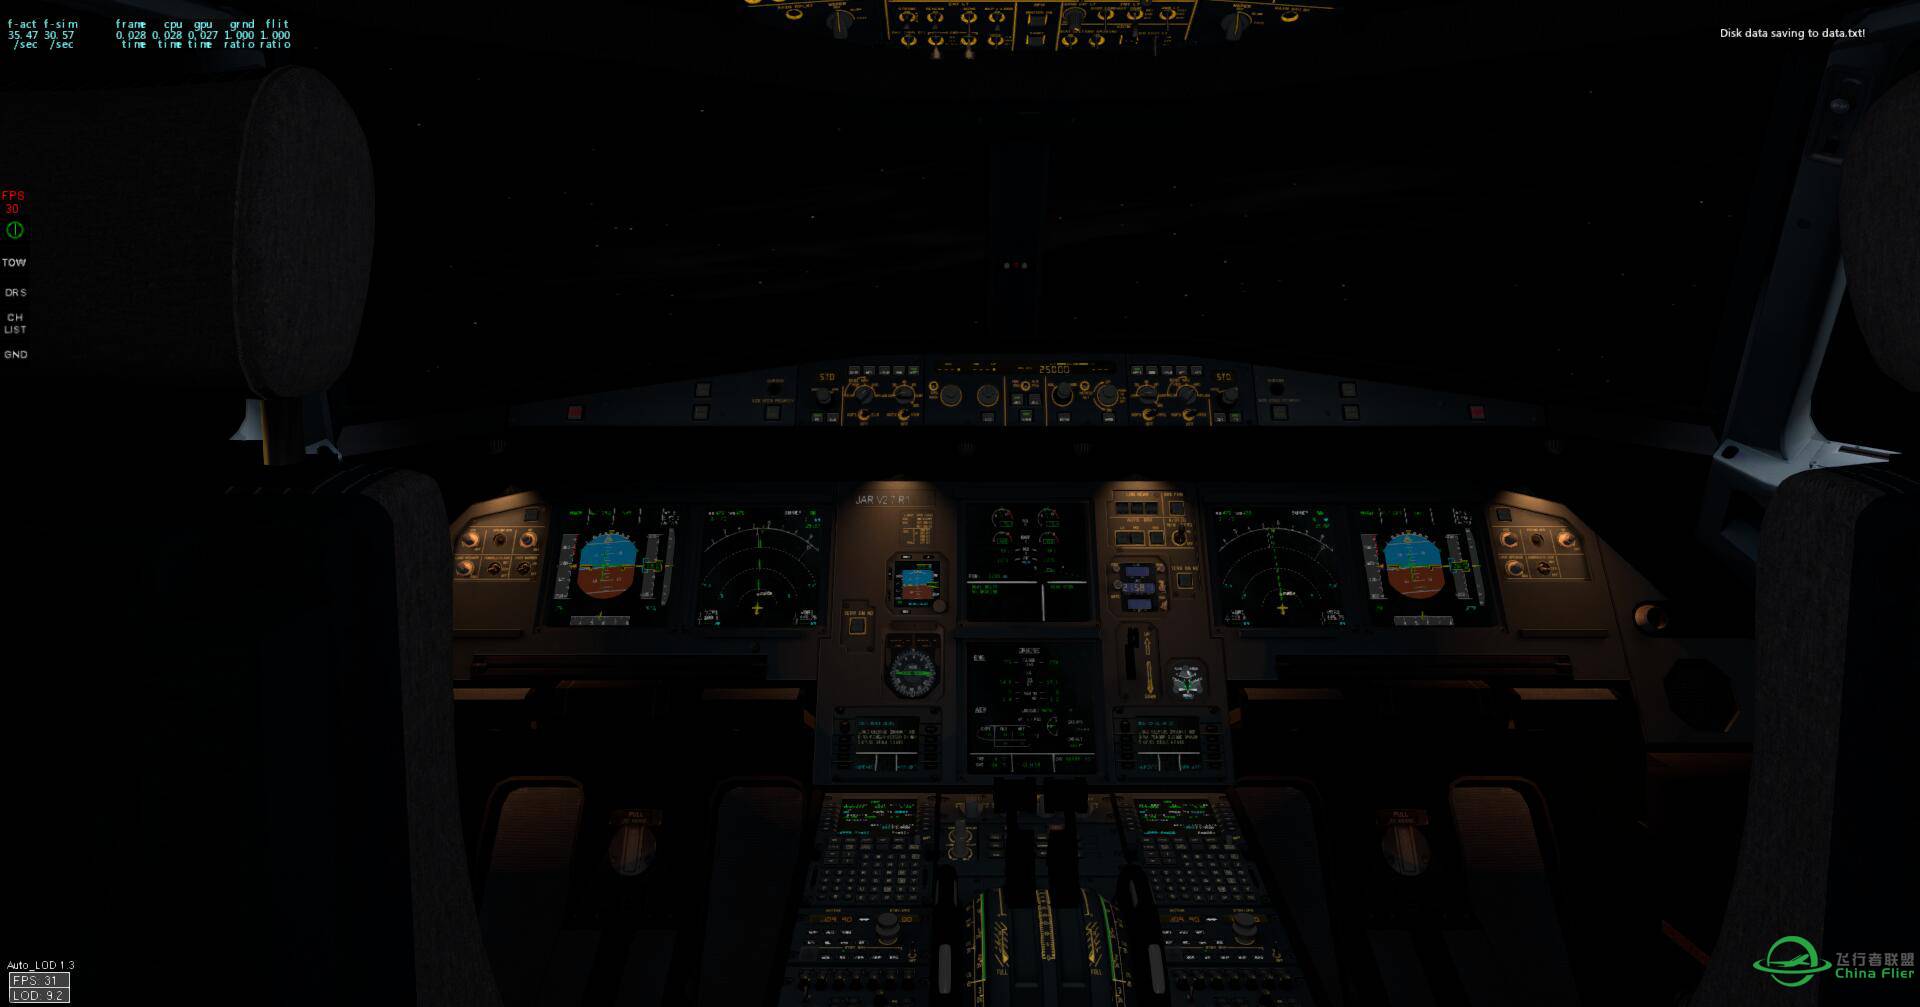 大爱XP A320，夜间终极效果太赞了！！！-5568 